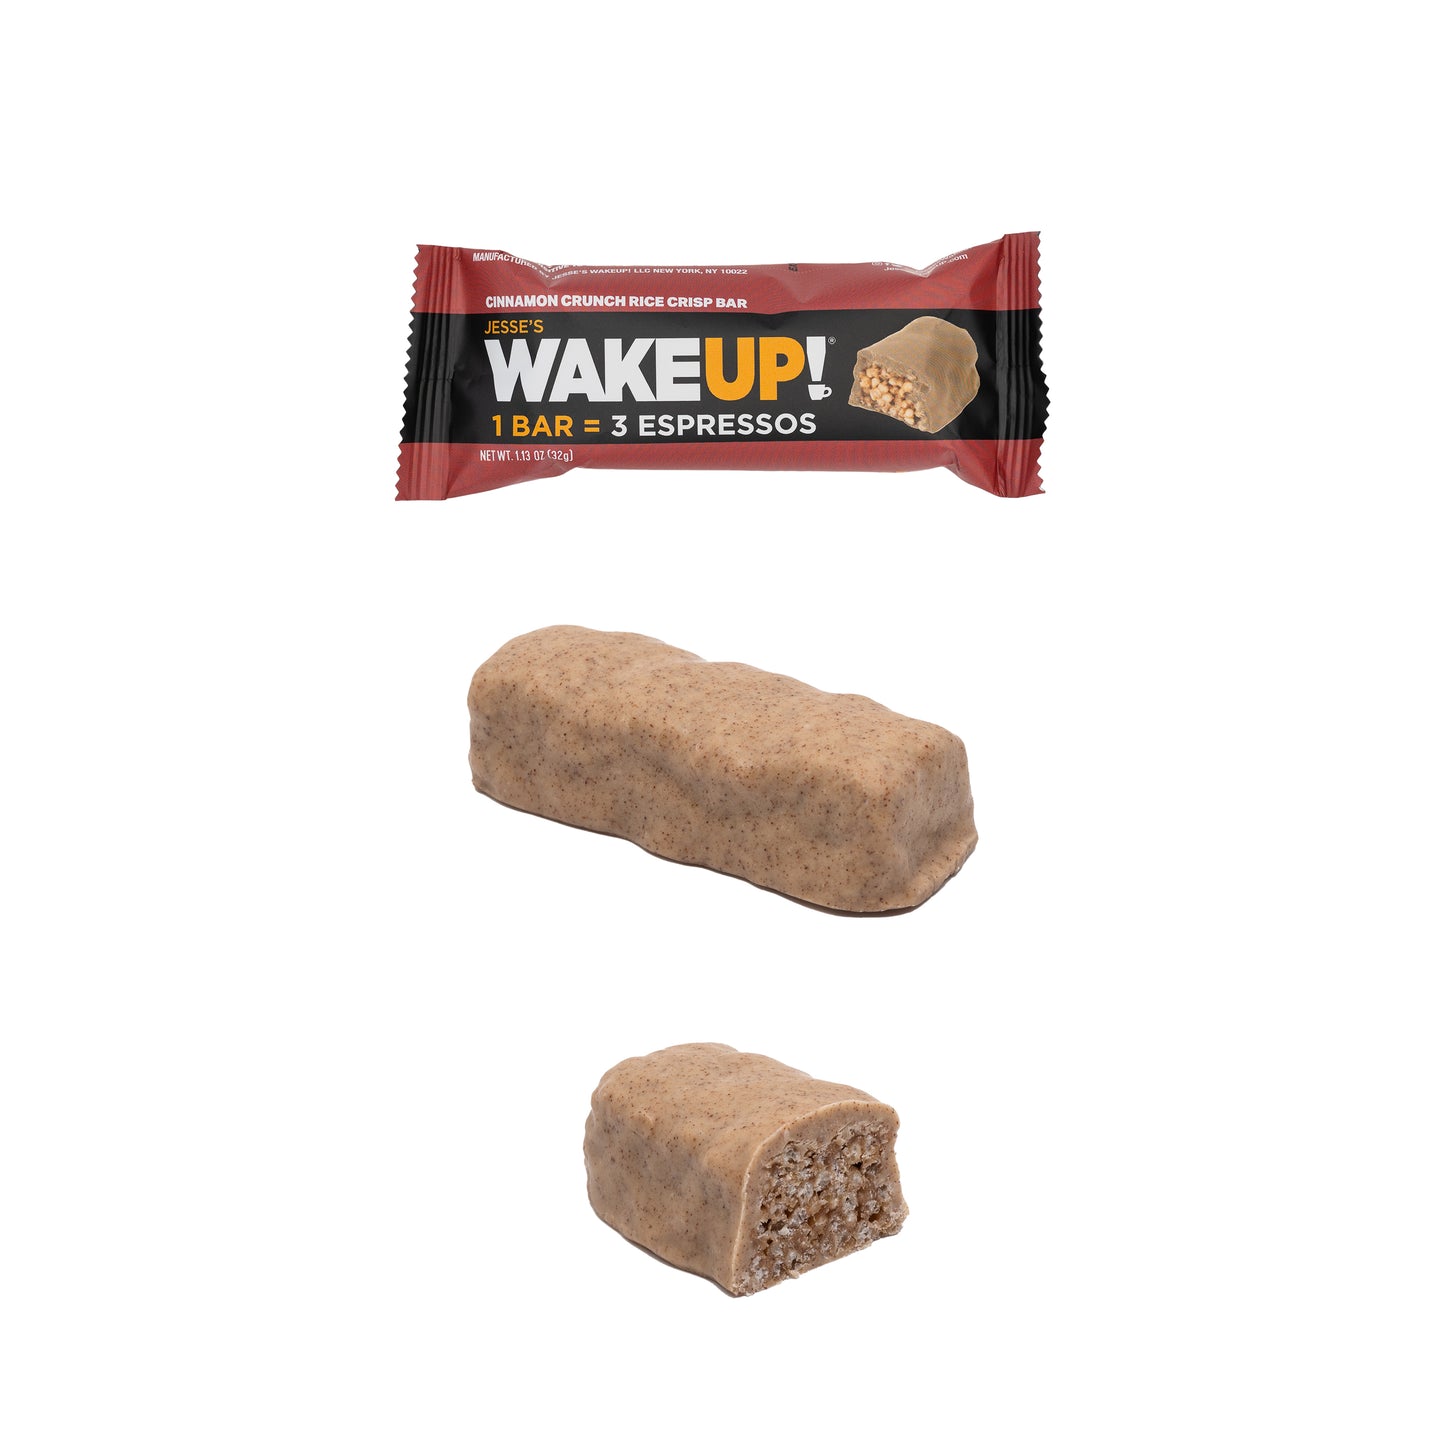 Jesse's WakeUP! 1 Bar = 3 Espressos (Cinnamon Crunch)